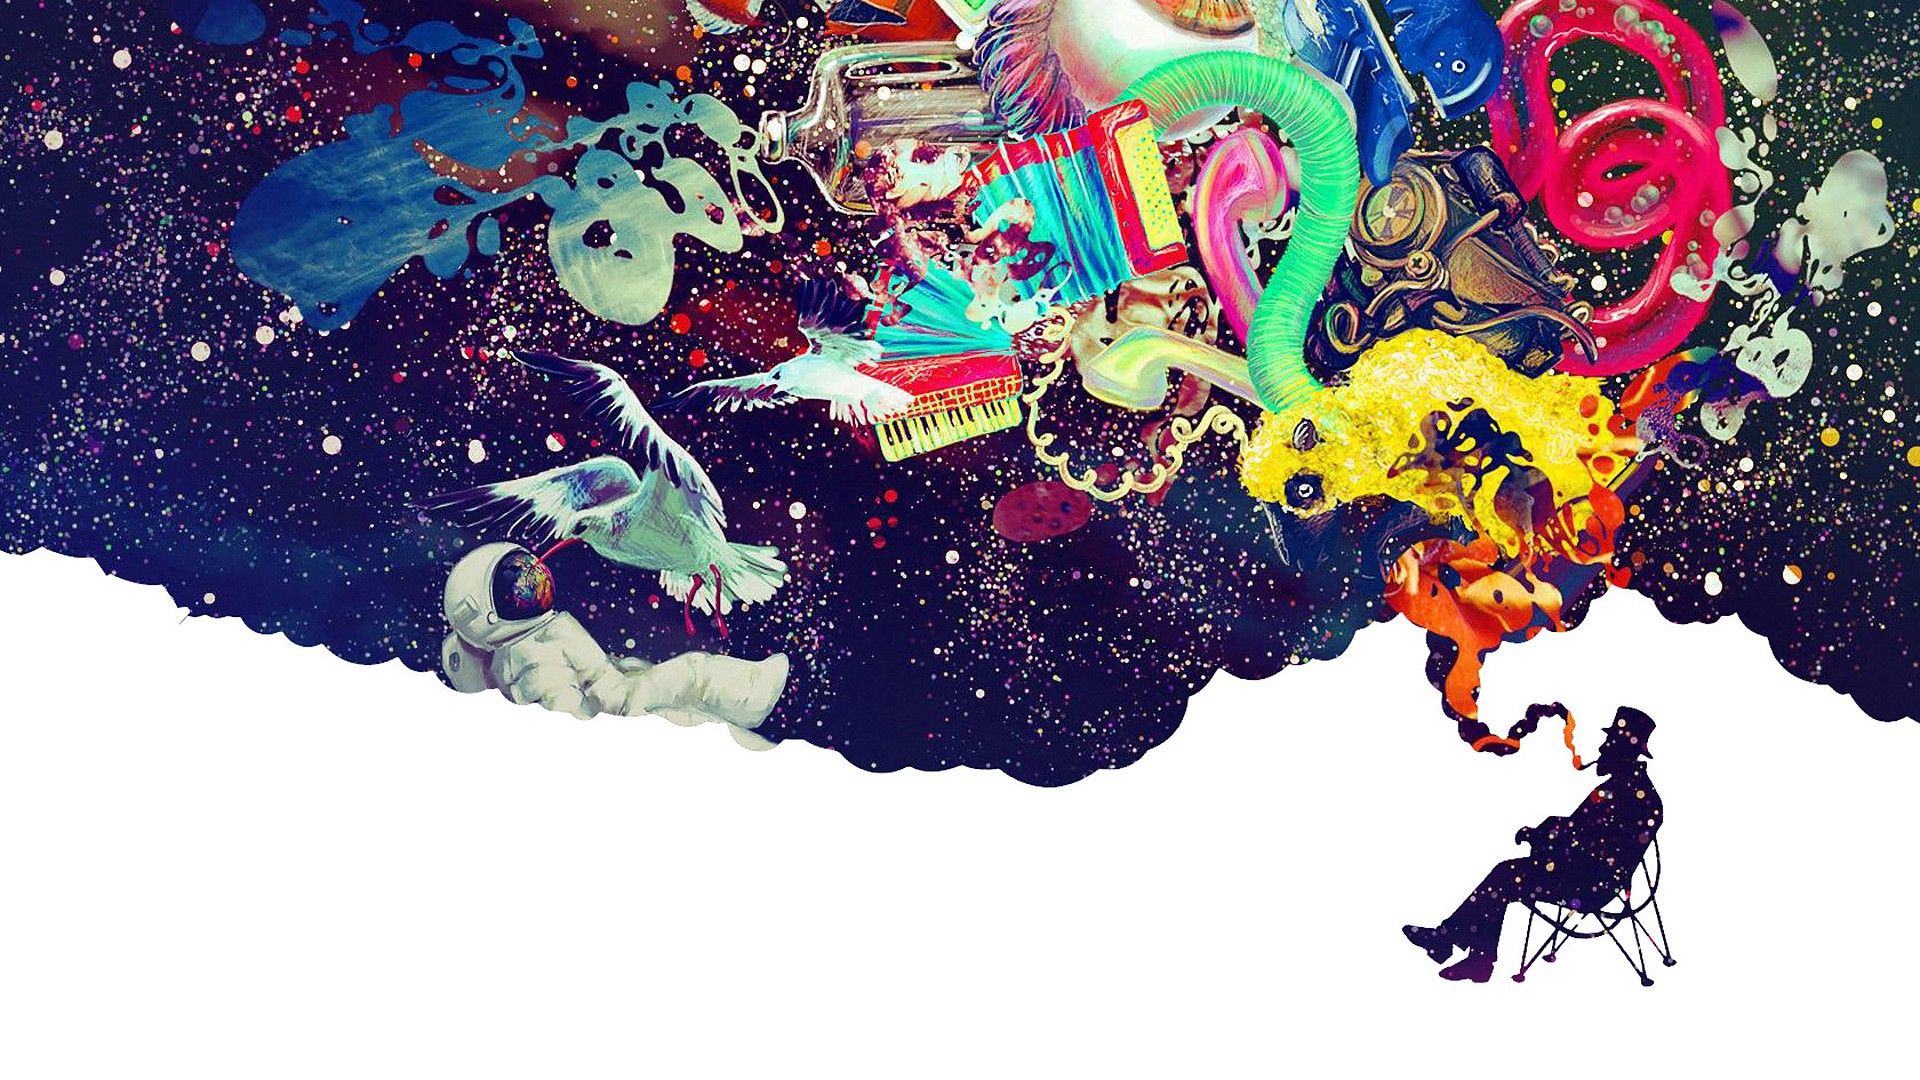 Imaginary Foundation Astronauts Colors Creativity Dreams wallpaper ...